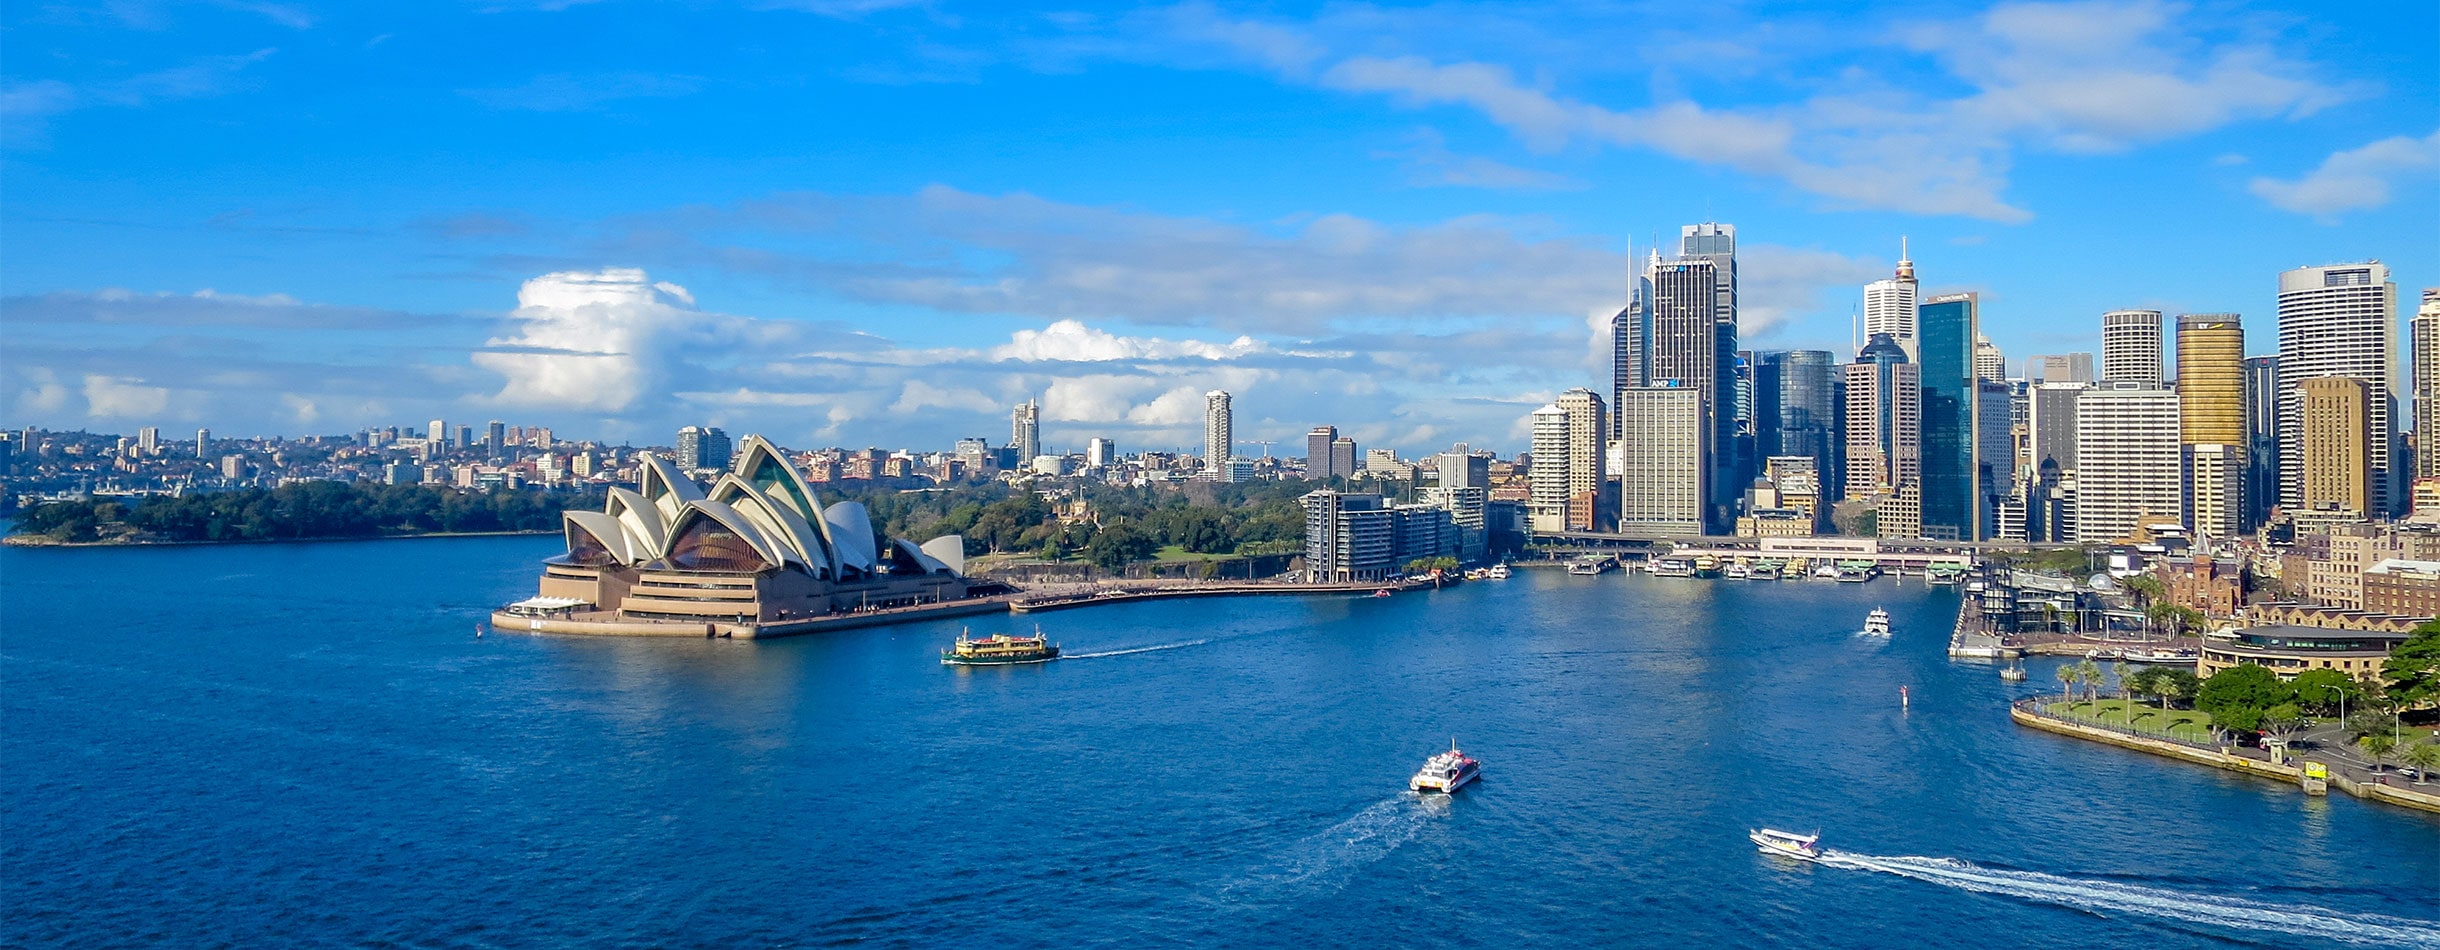 Sydney Opera hours and Harbour, Australia 